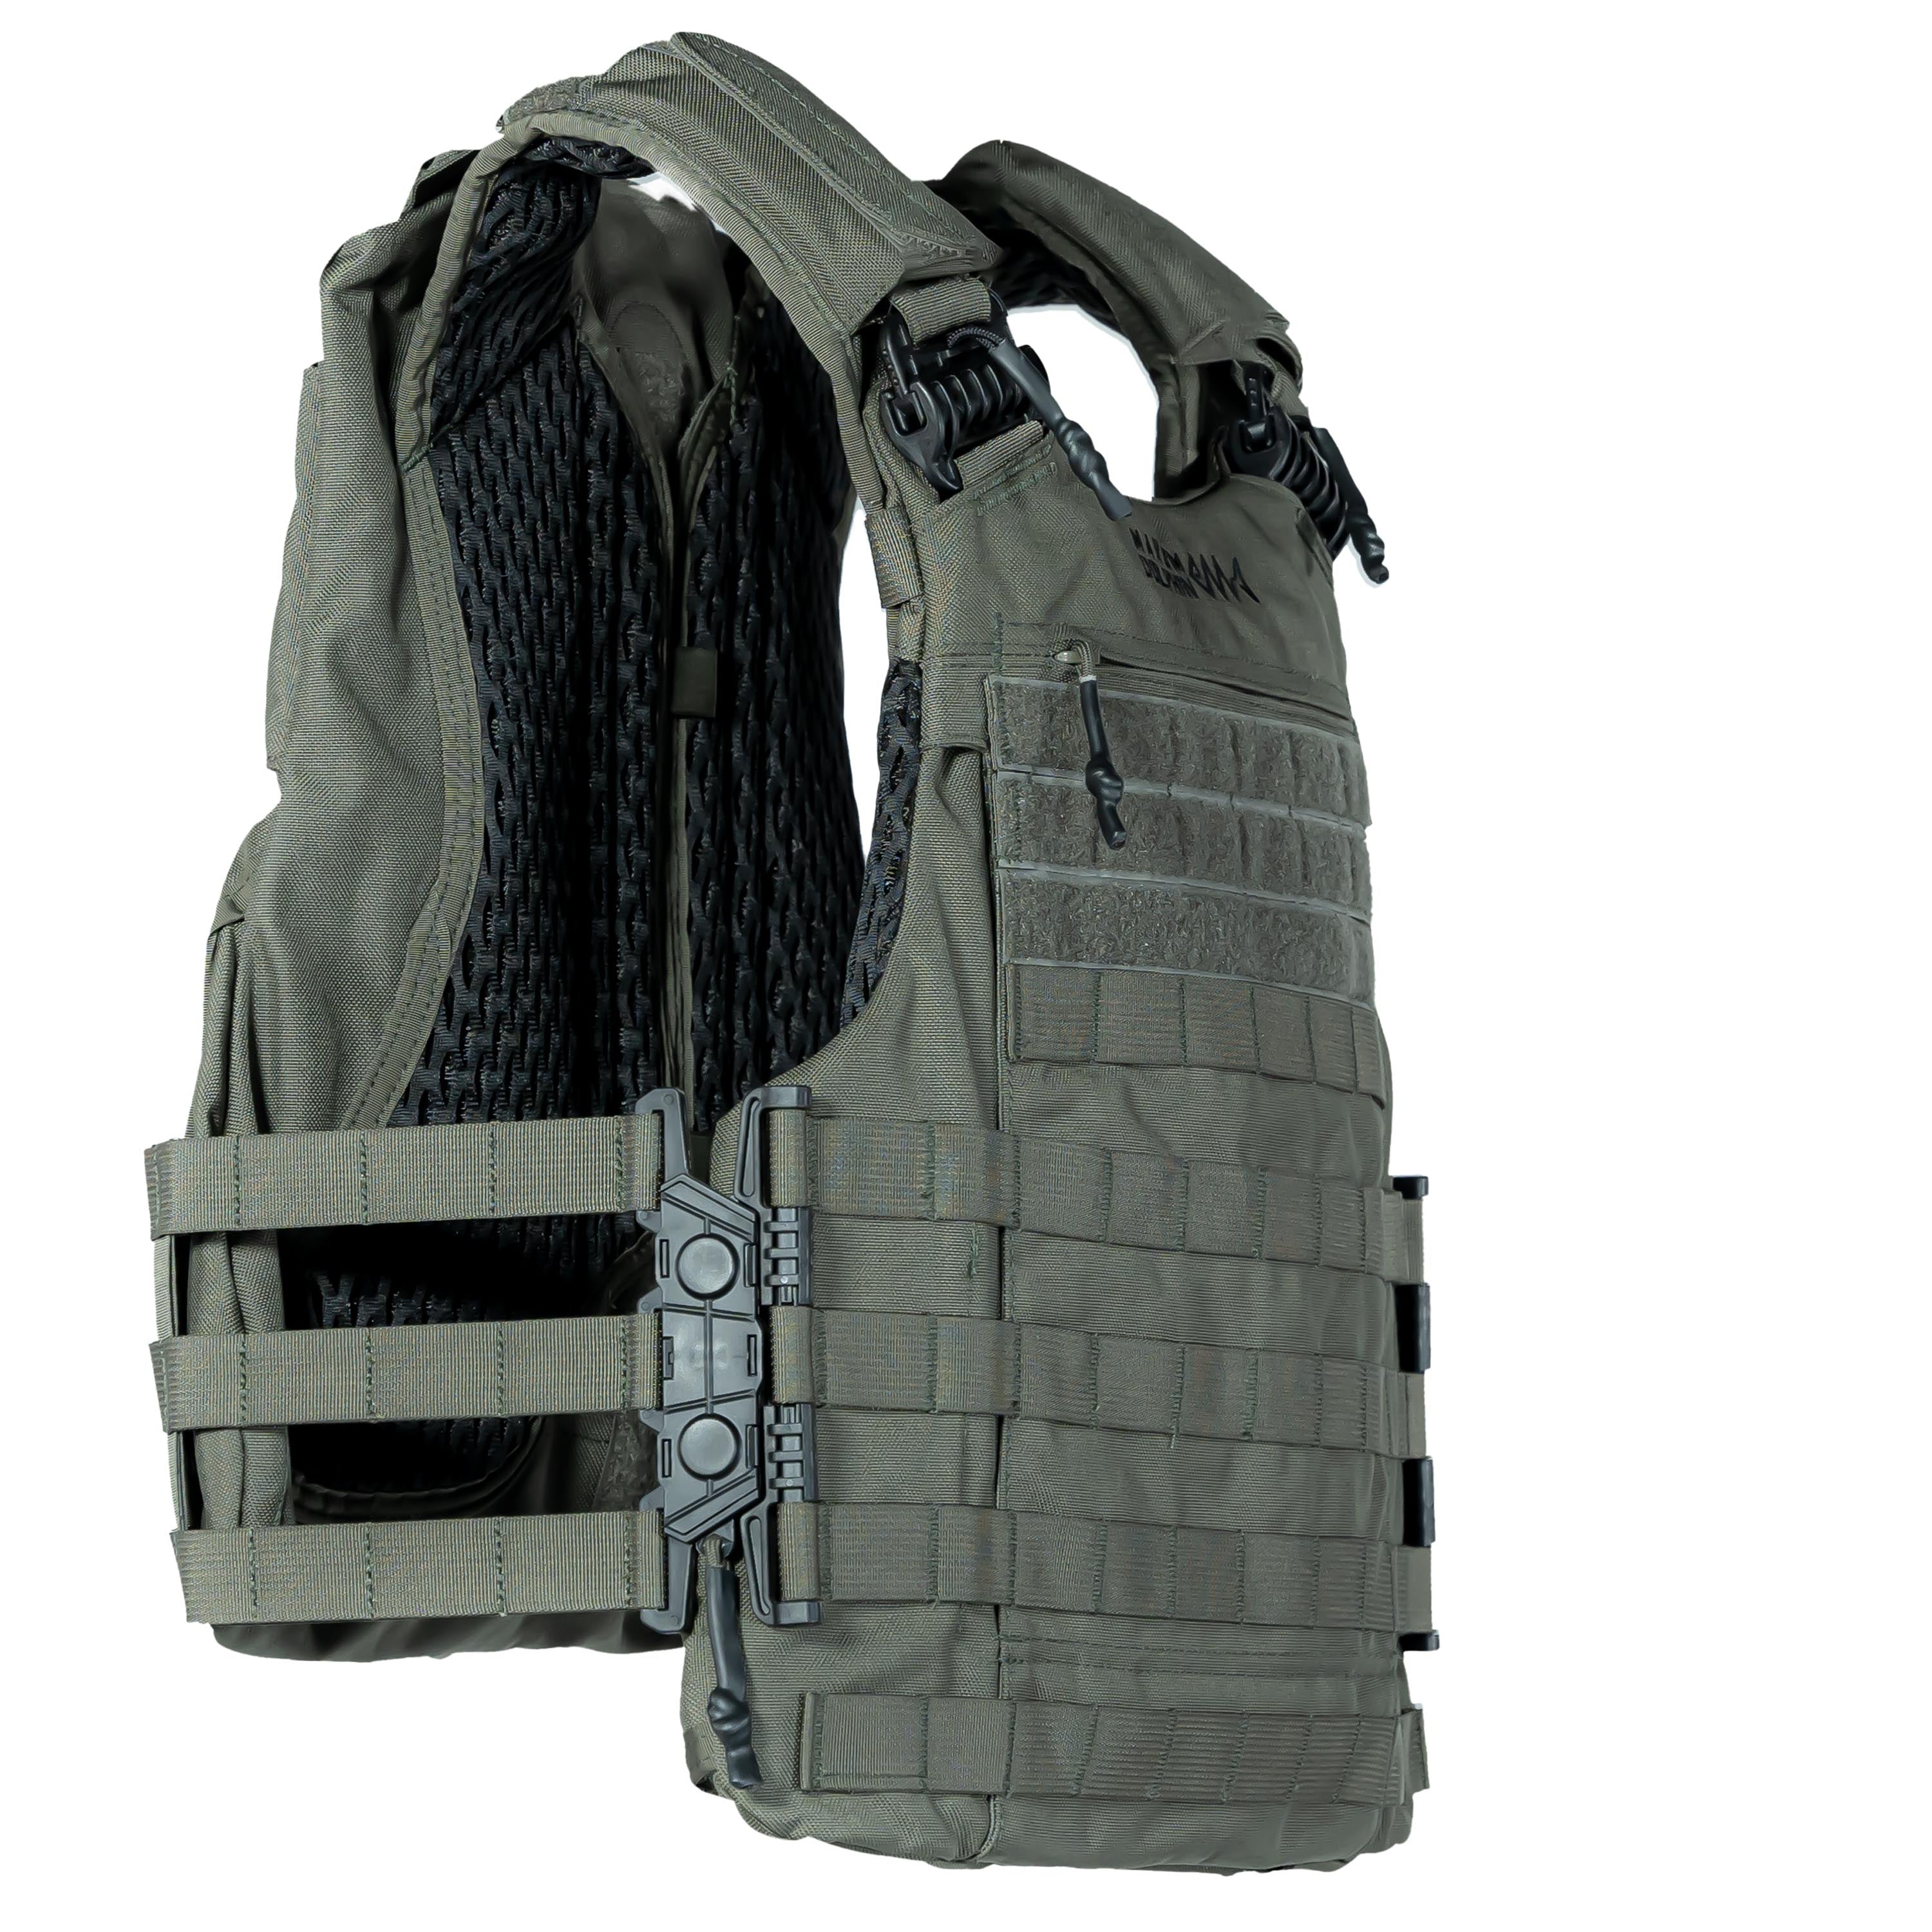 Commando vest - Pre-order for delivery in June 2024